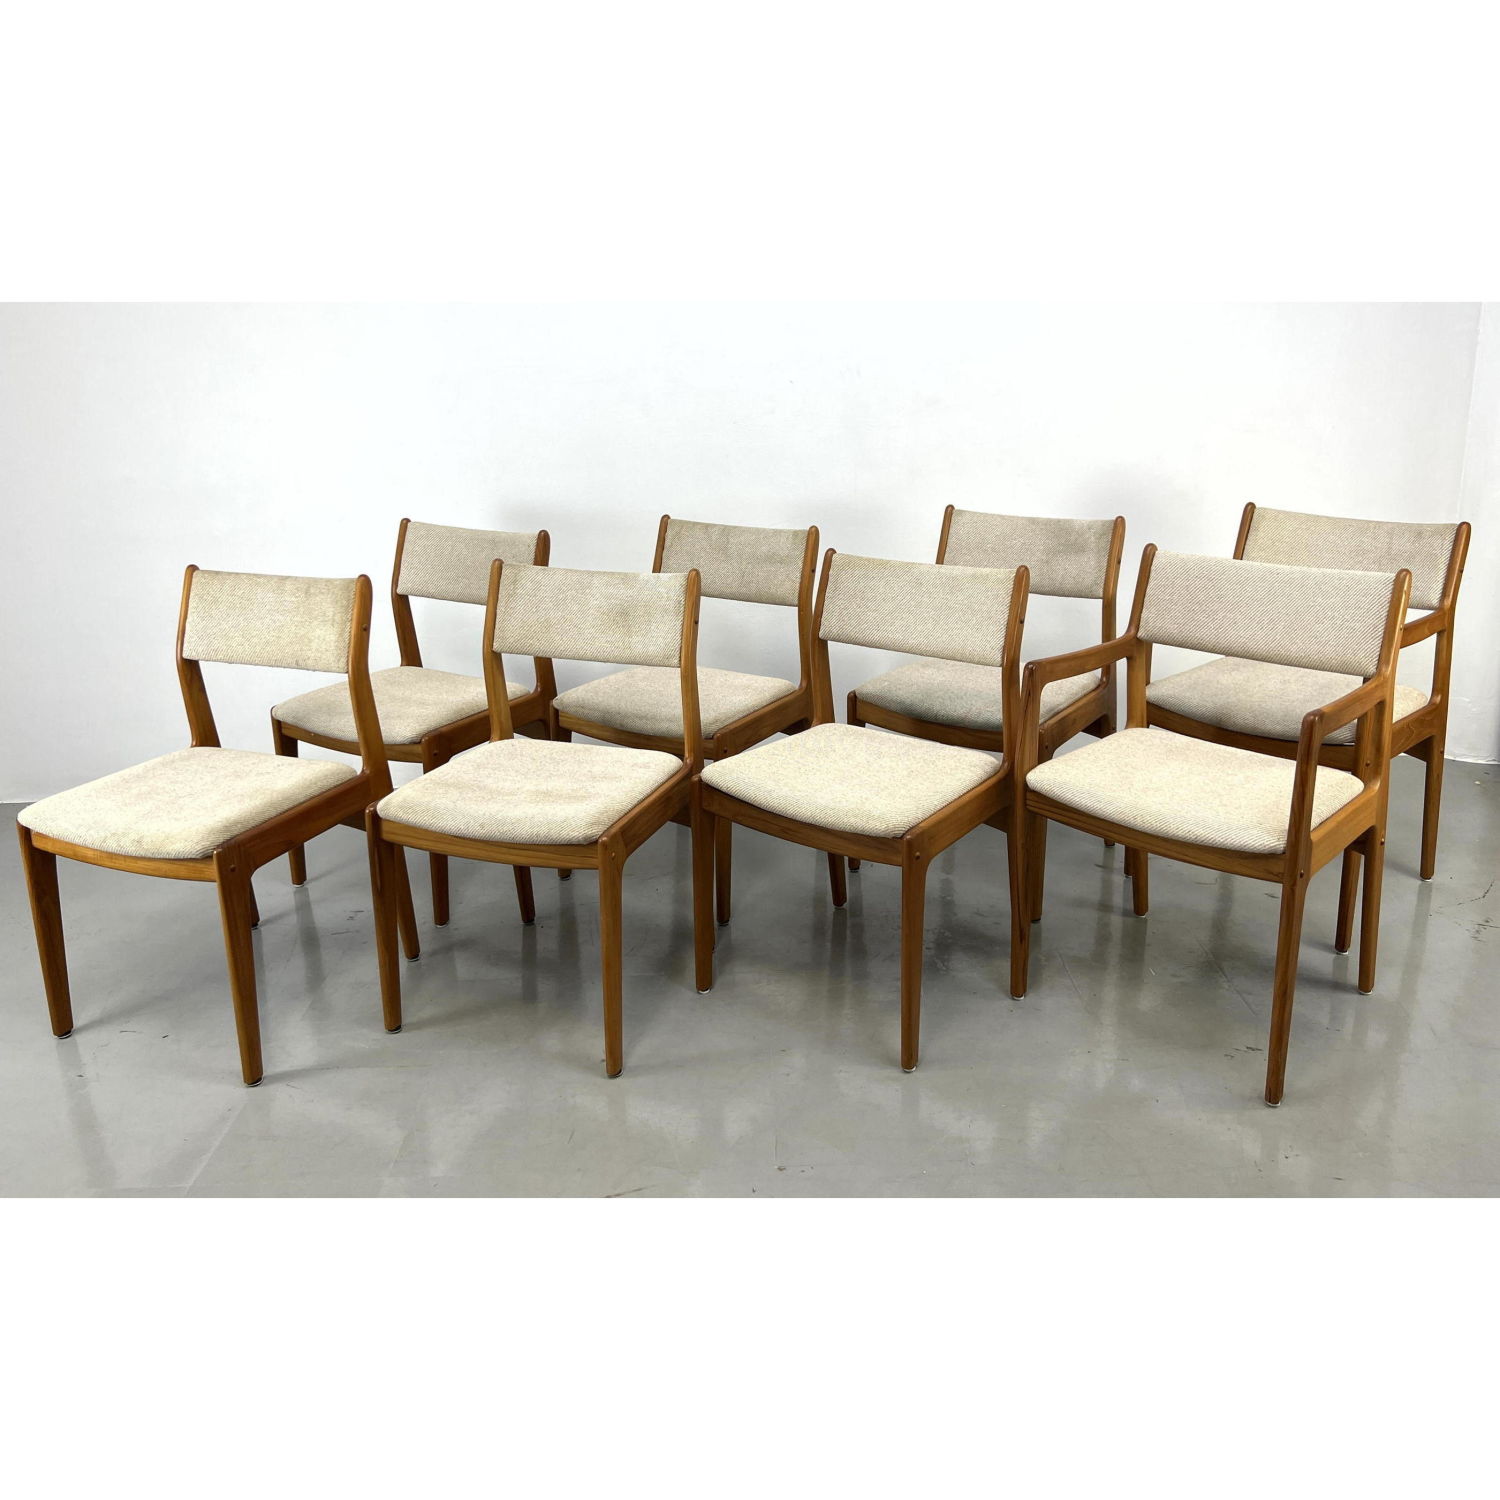 Set 8 Modern Teak Dining Chairs.